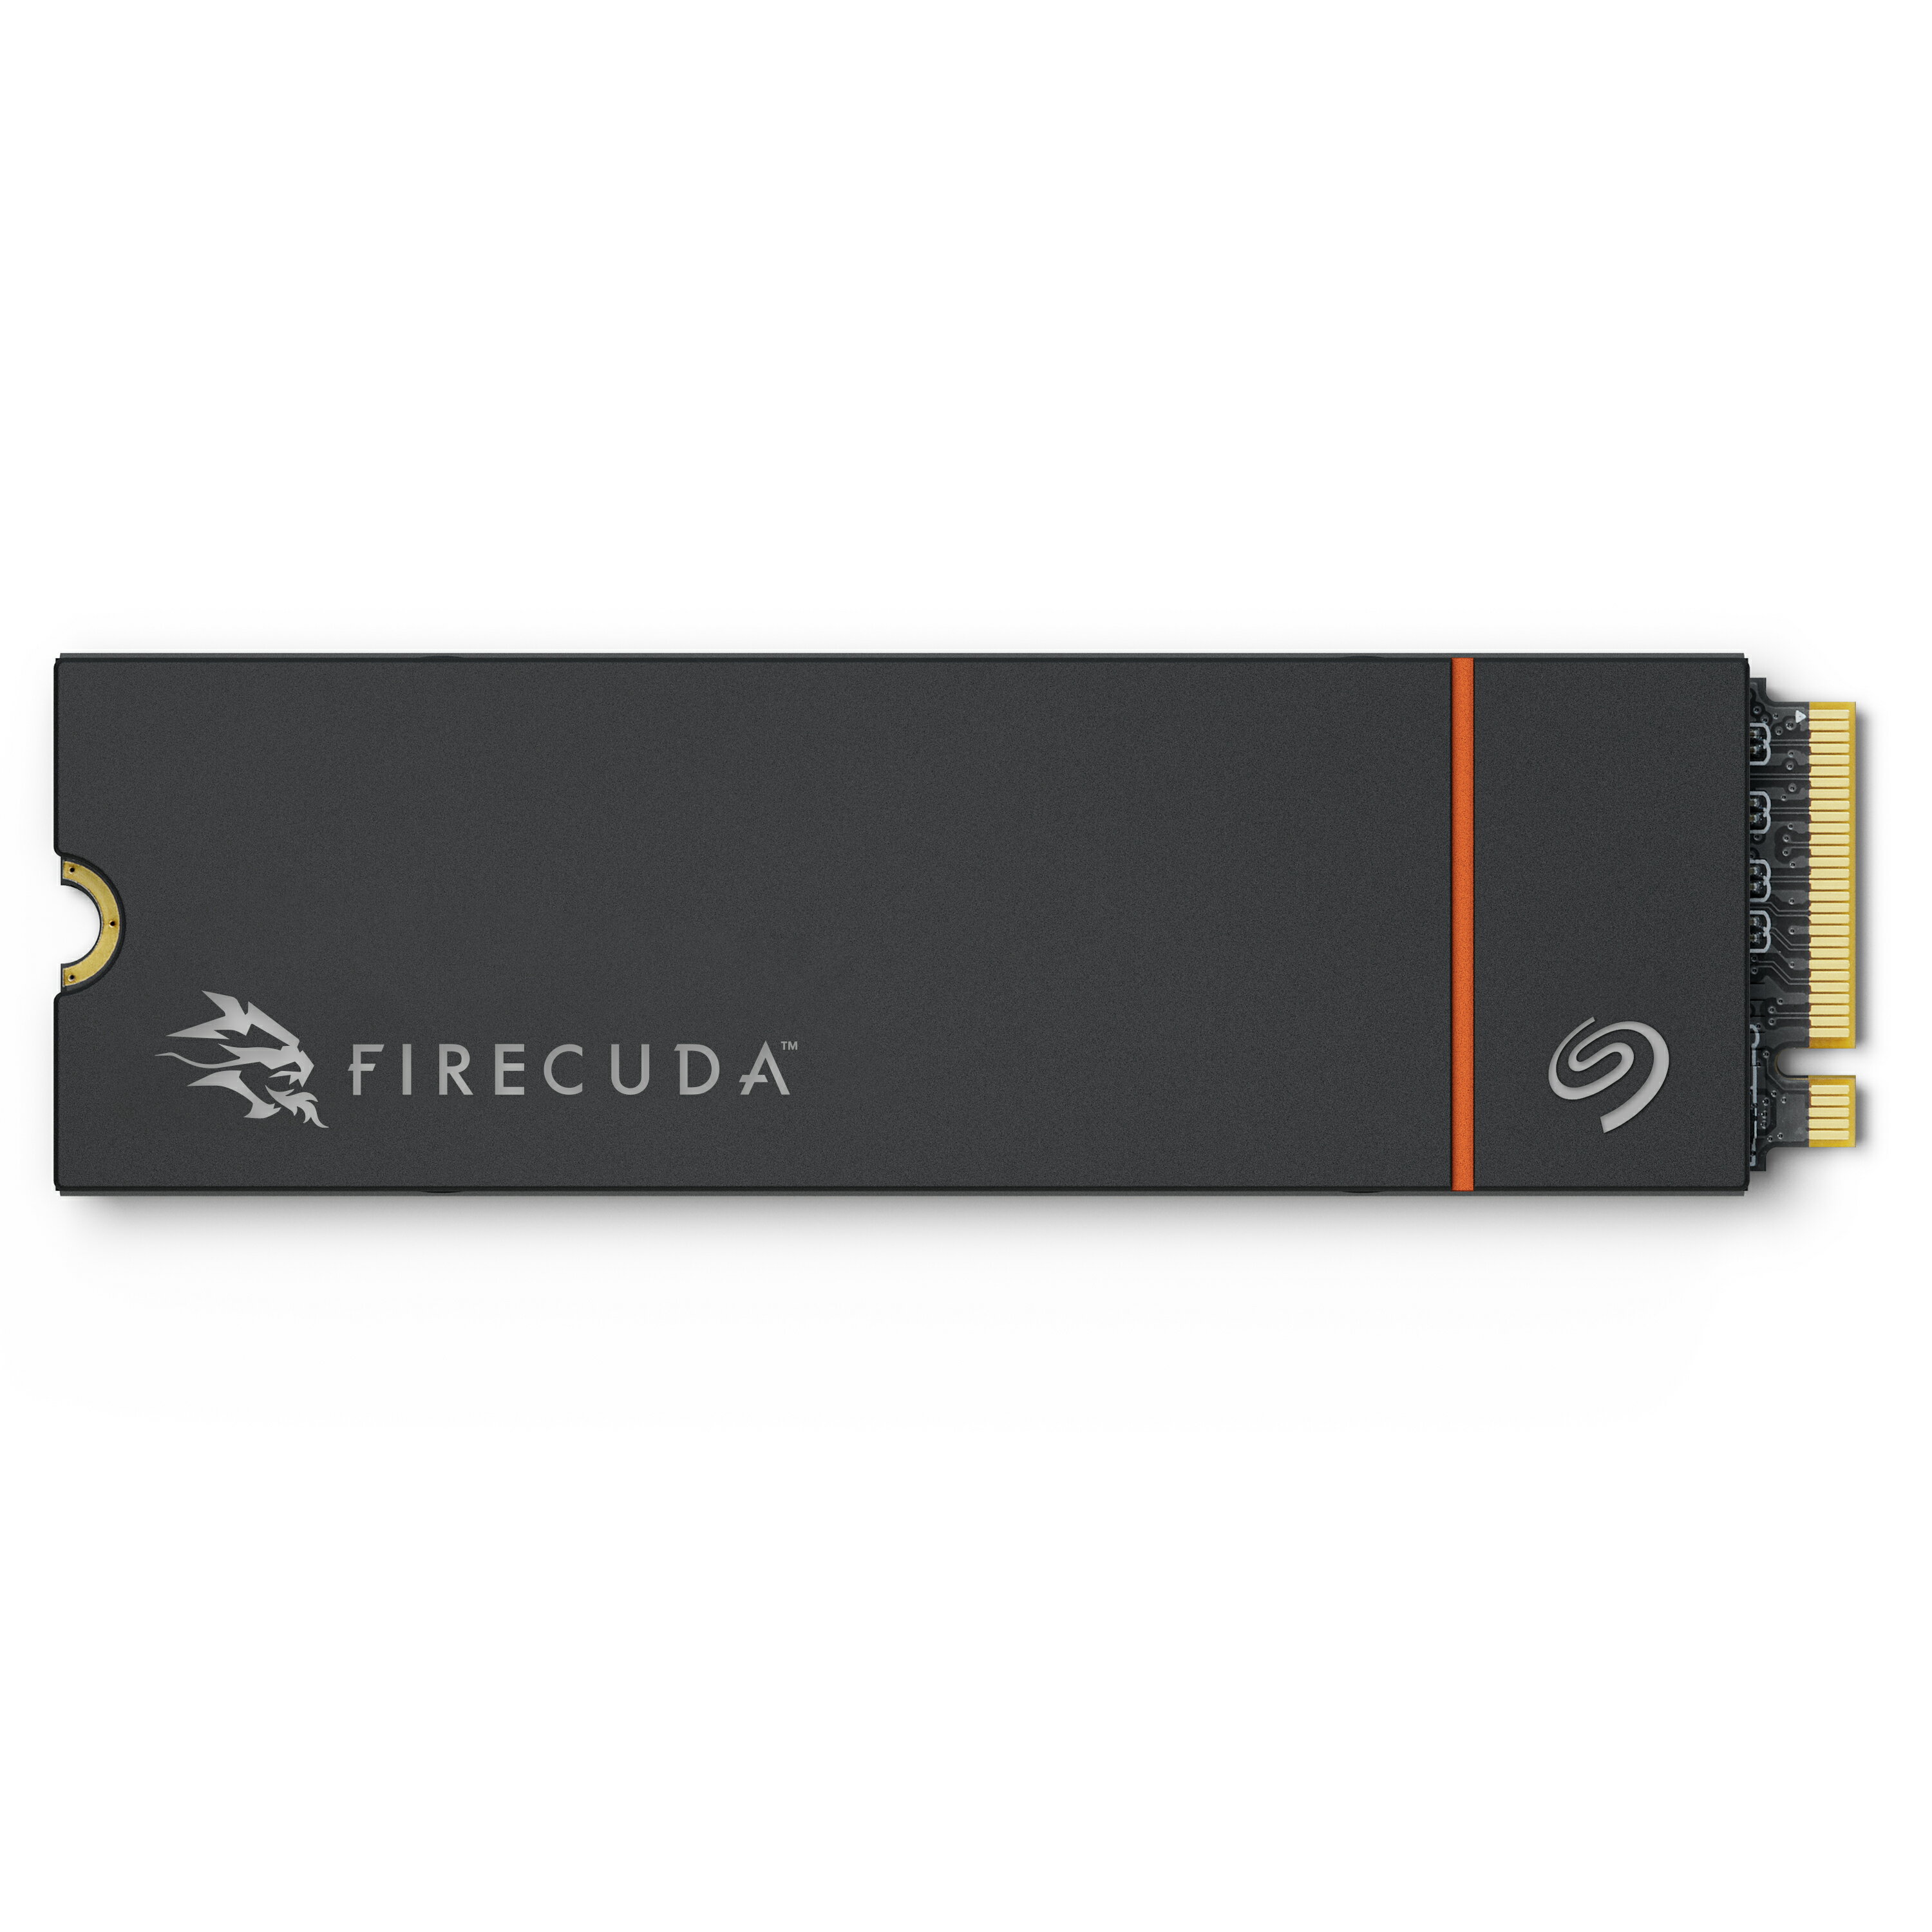 Seagate シーゲイト FireCuda 530 M.2 内蔵 SSD ヒートシンク付き  500GB PCIe Gen4 x4 読取速度 7000MB/s 5年保証 データ復旧 3年付 正規代理店 ZP500GM3A023